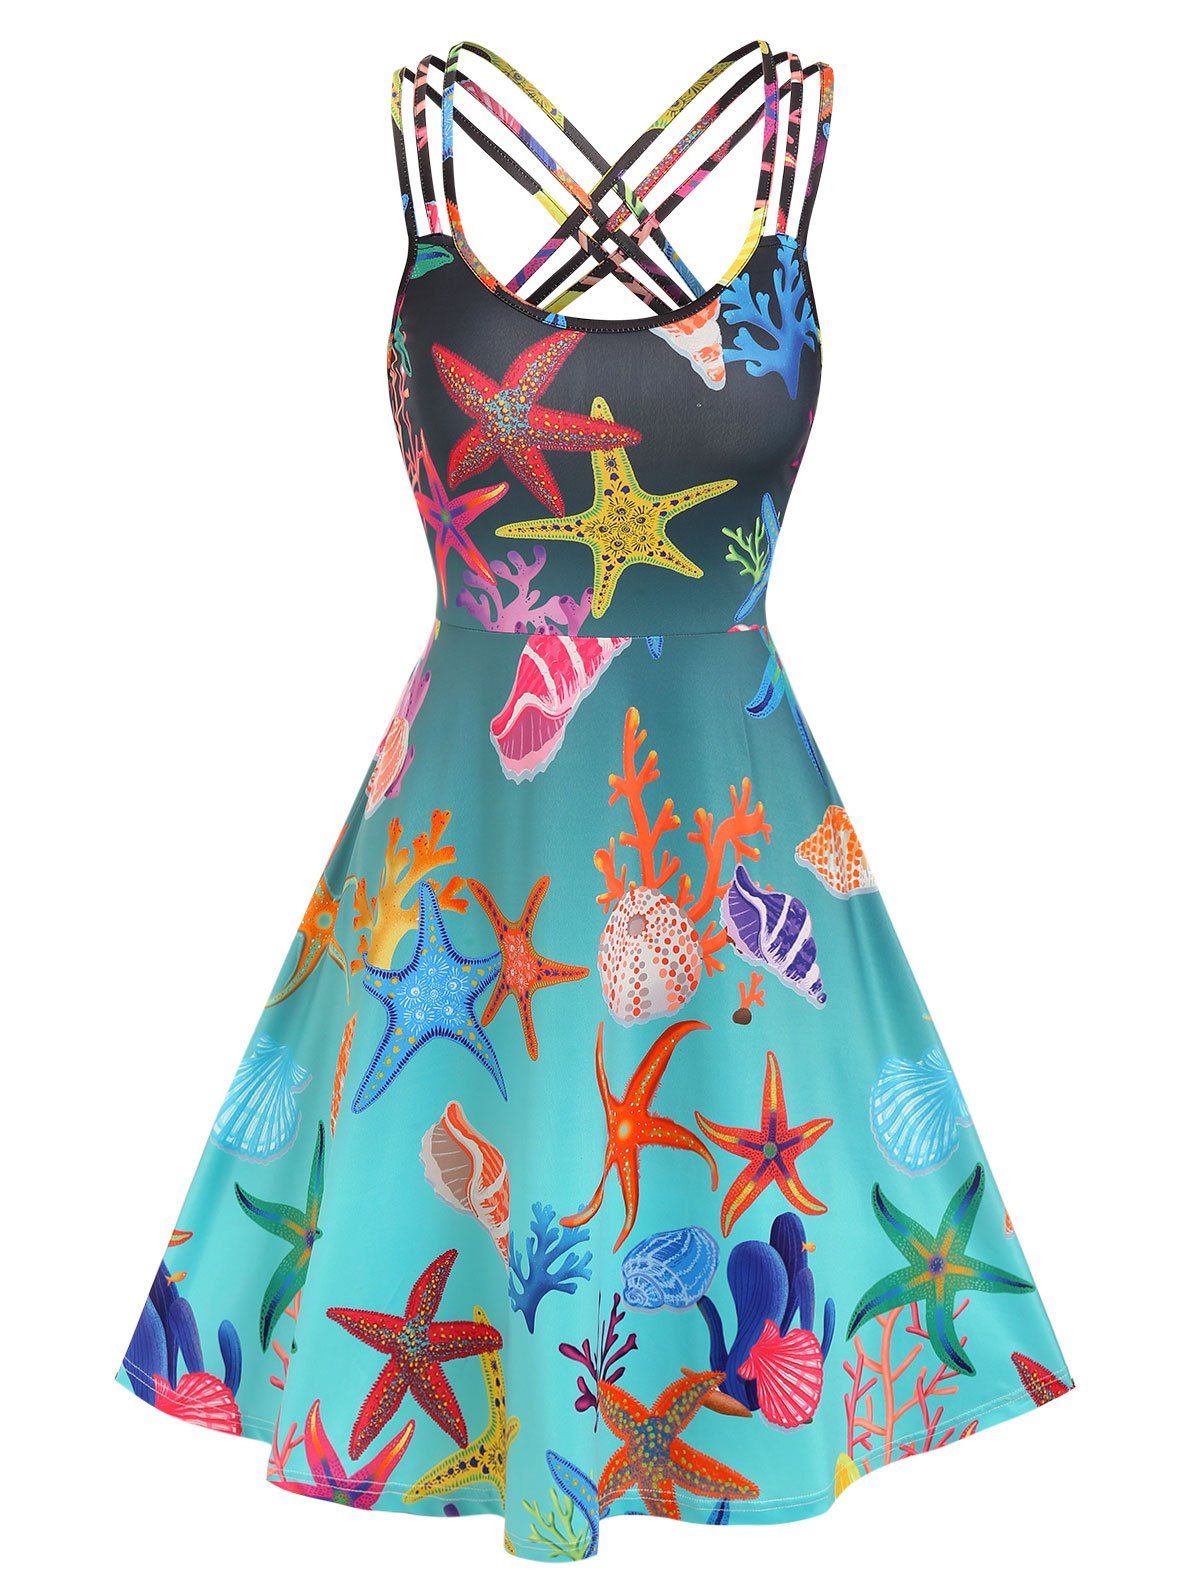 Vacation Dress Marine Life Print Beach Mini Dress Crisscross Strappy A Line Sundress - LIGHT BLUE XXL